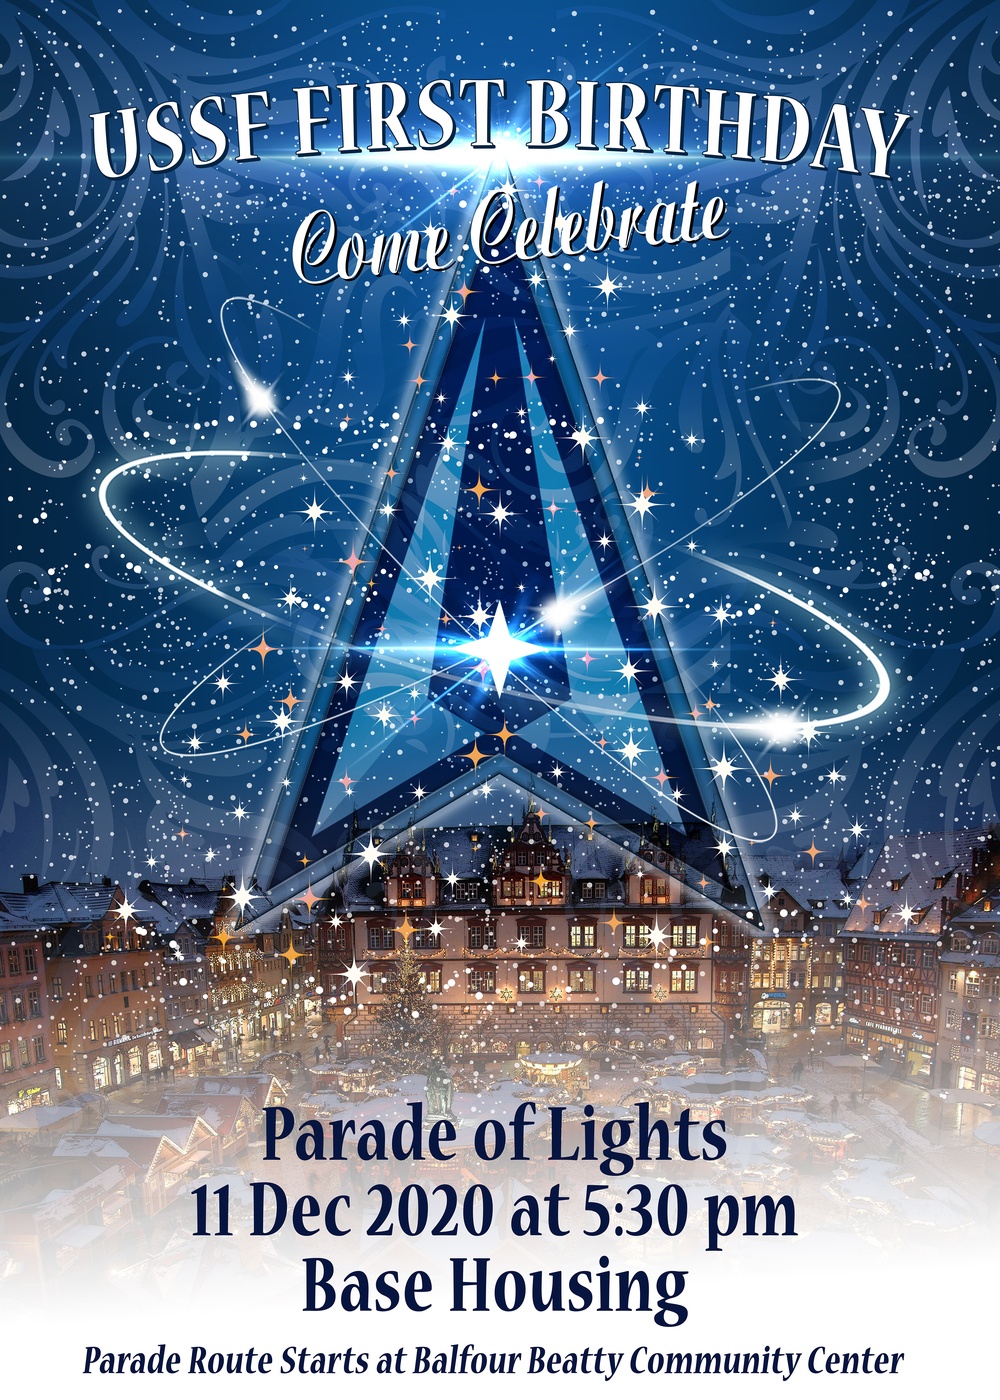 USSF 1st Birthday Parade of Lights Celebration